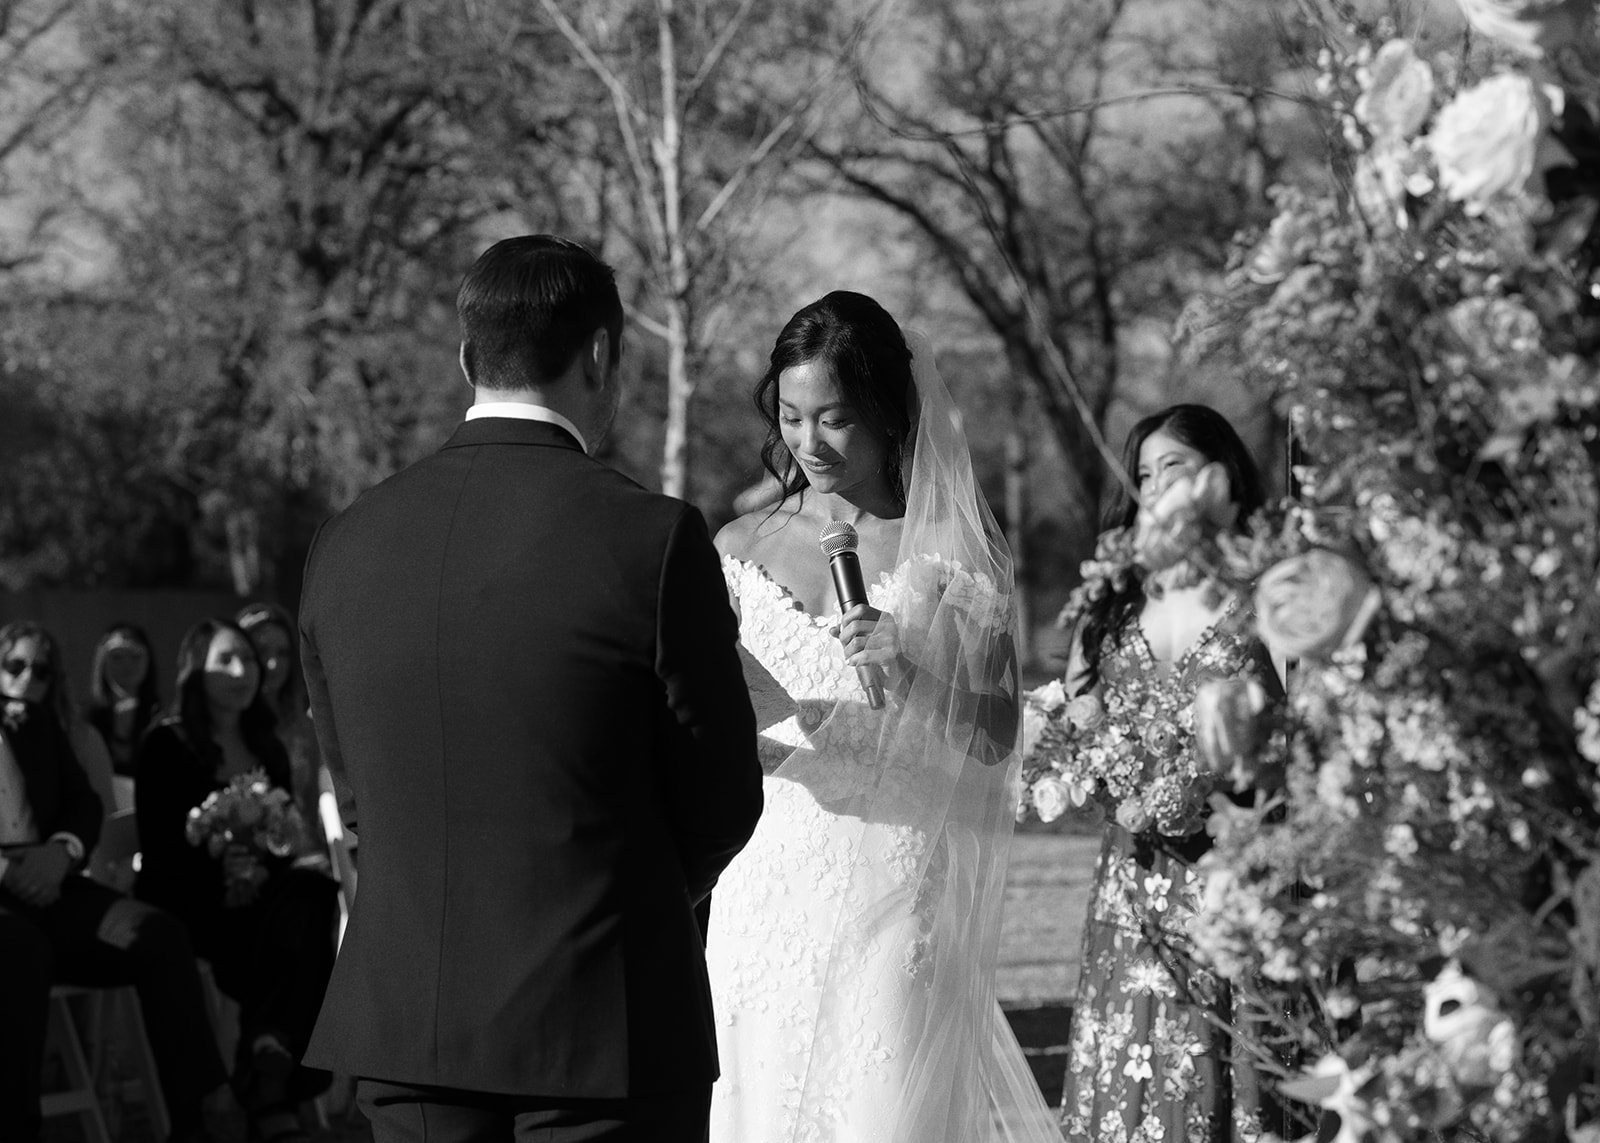 Best-Austin-Wedding-Photographers-Elopement-Film-35mm-Asheville-Santa-Barbara-Grand-Lady-114.jpg